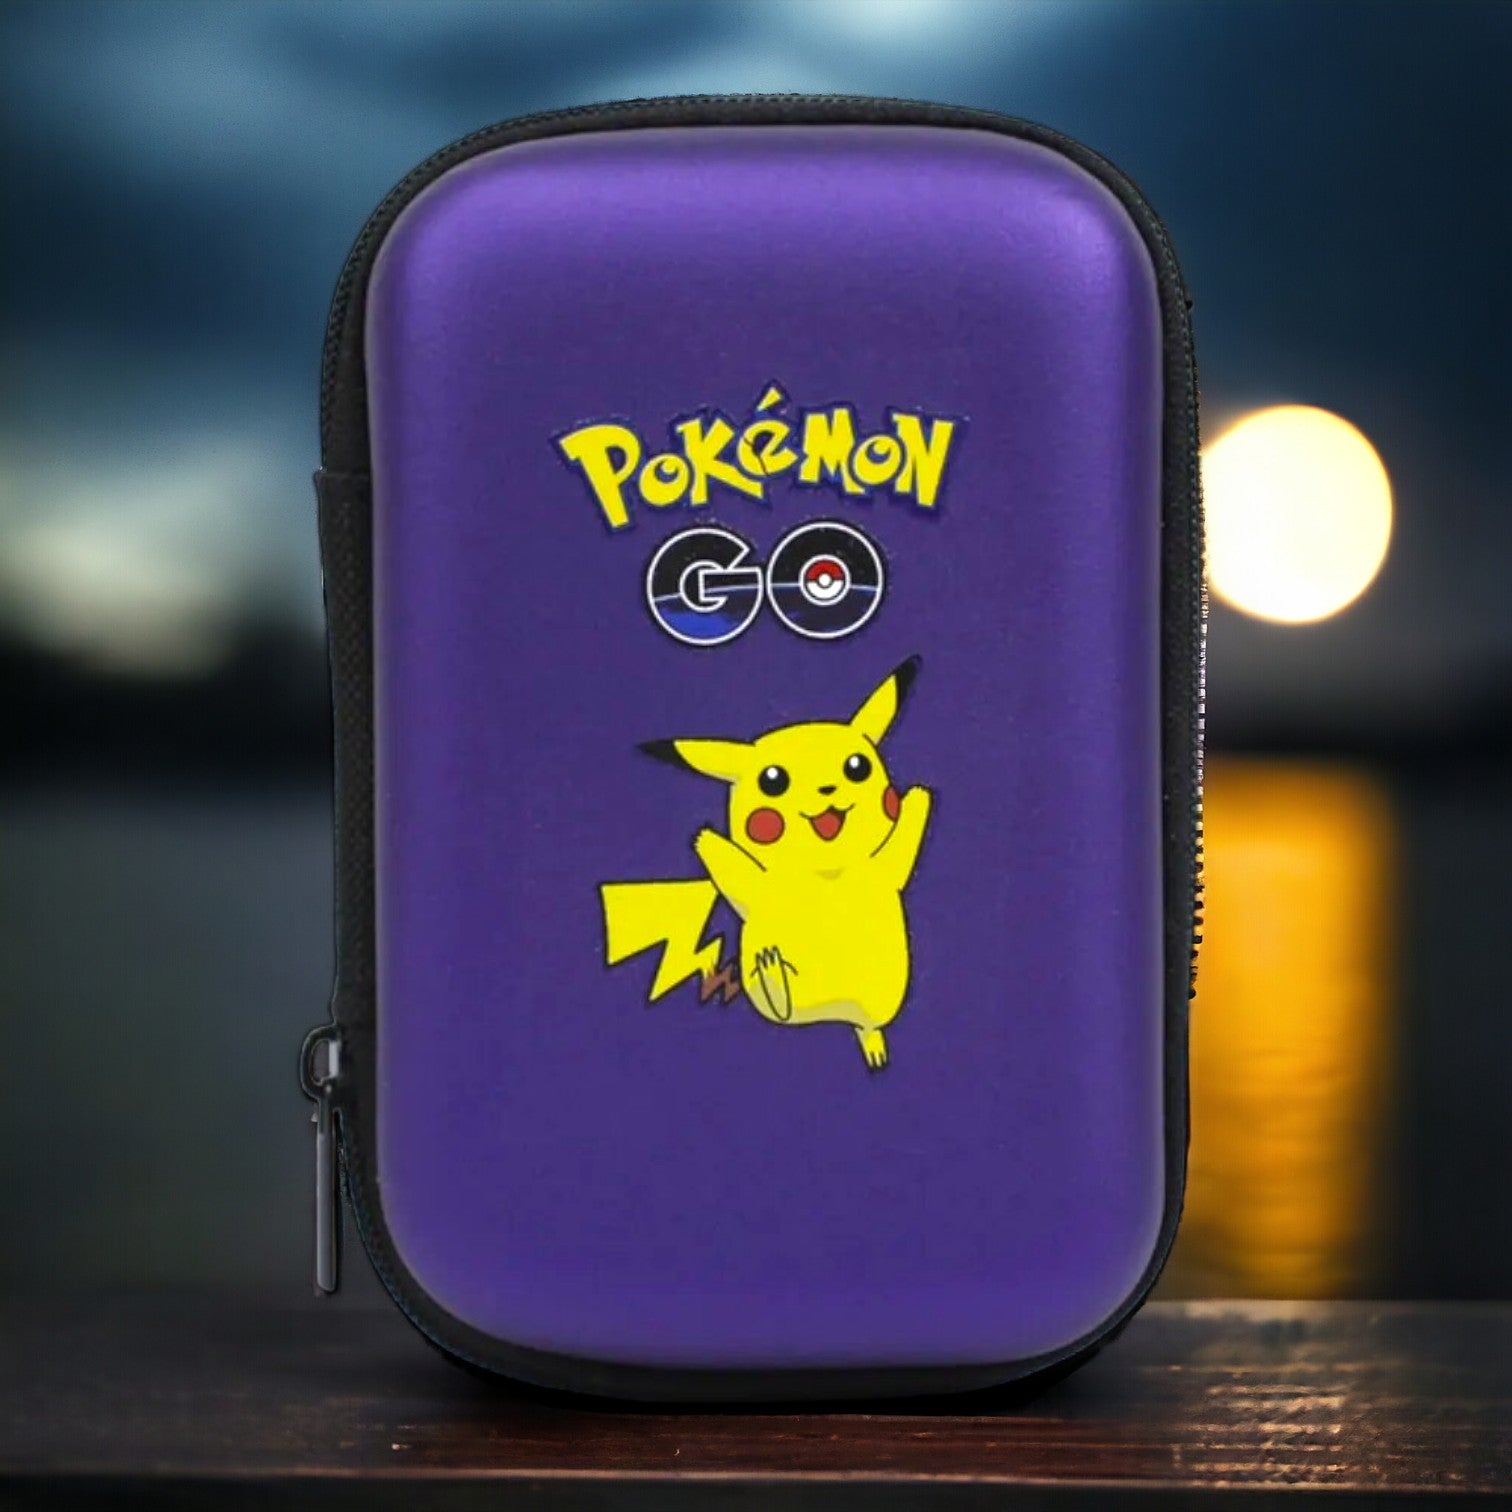 Hard case - Pokémon card holder